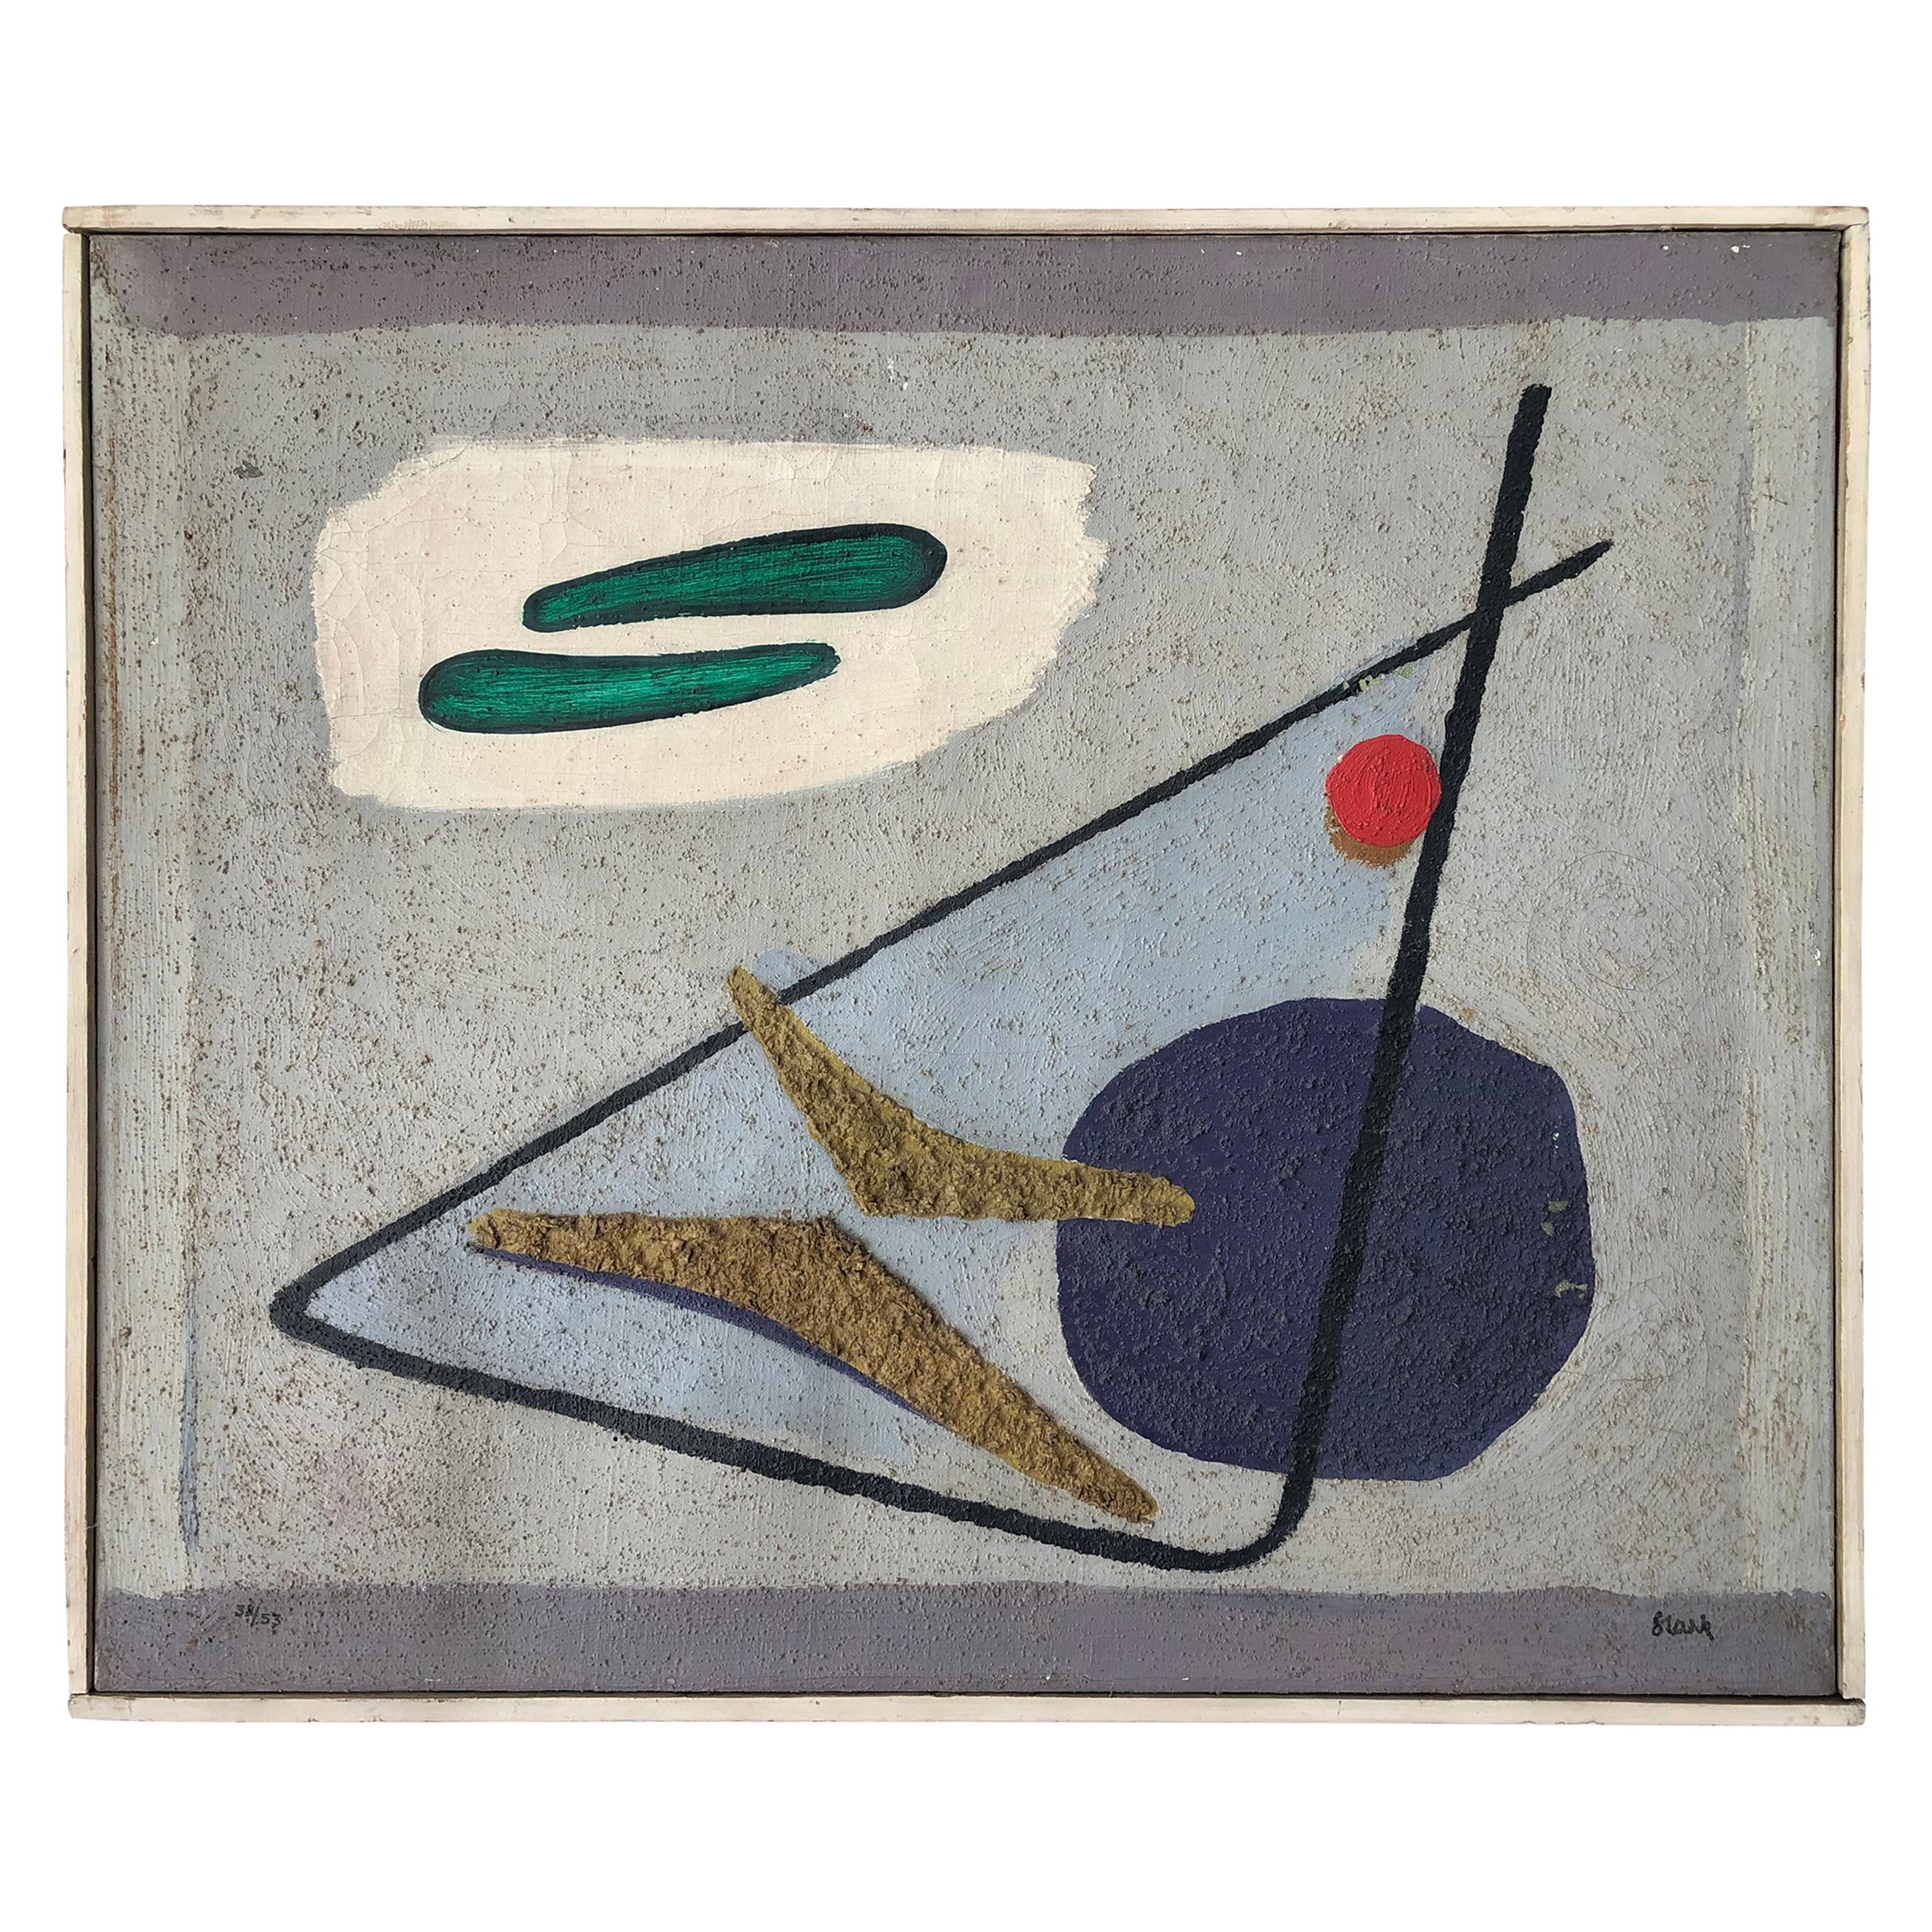 Gustl Stark, Abstract Oil on Canvas, 1953